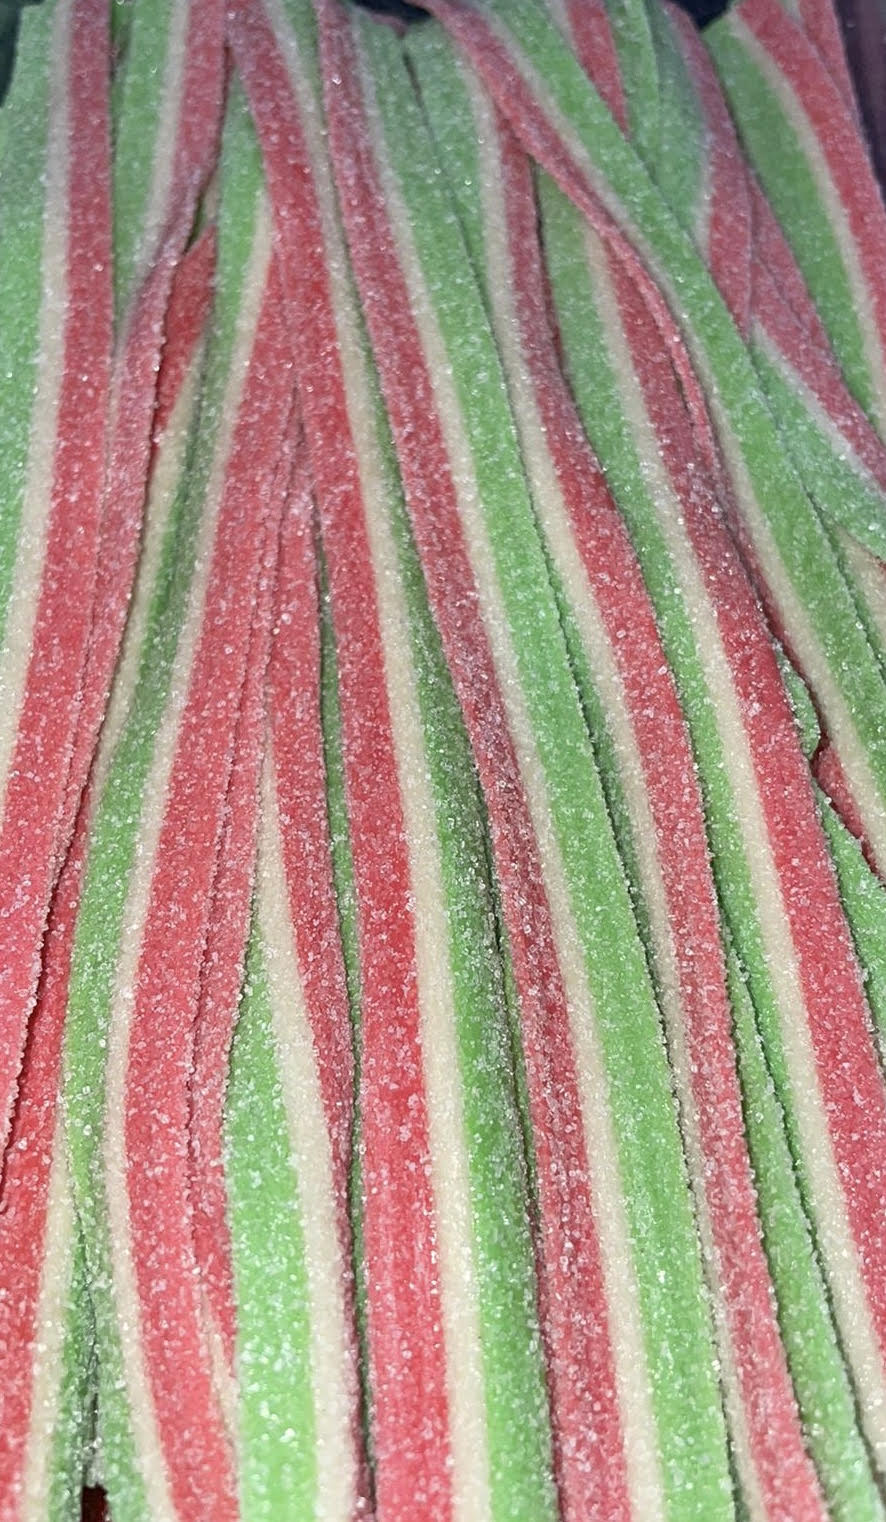 Watermelon Sour Straps -100g